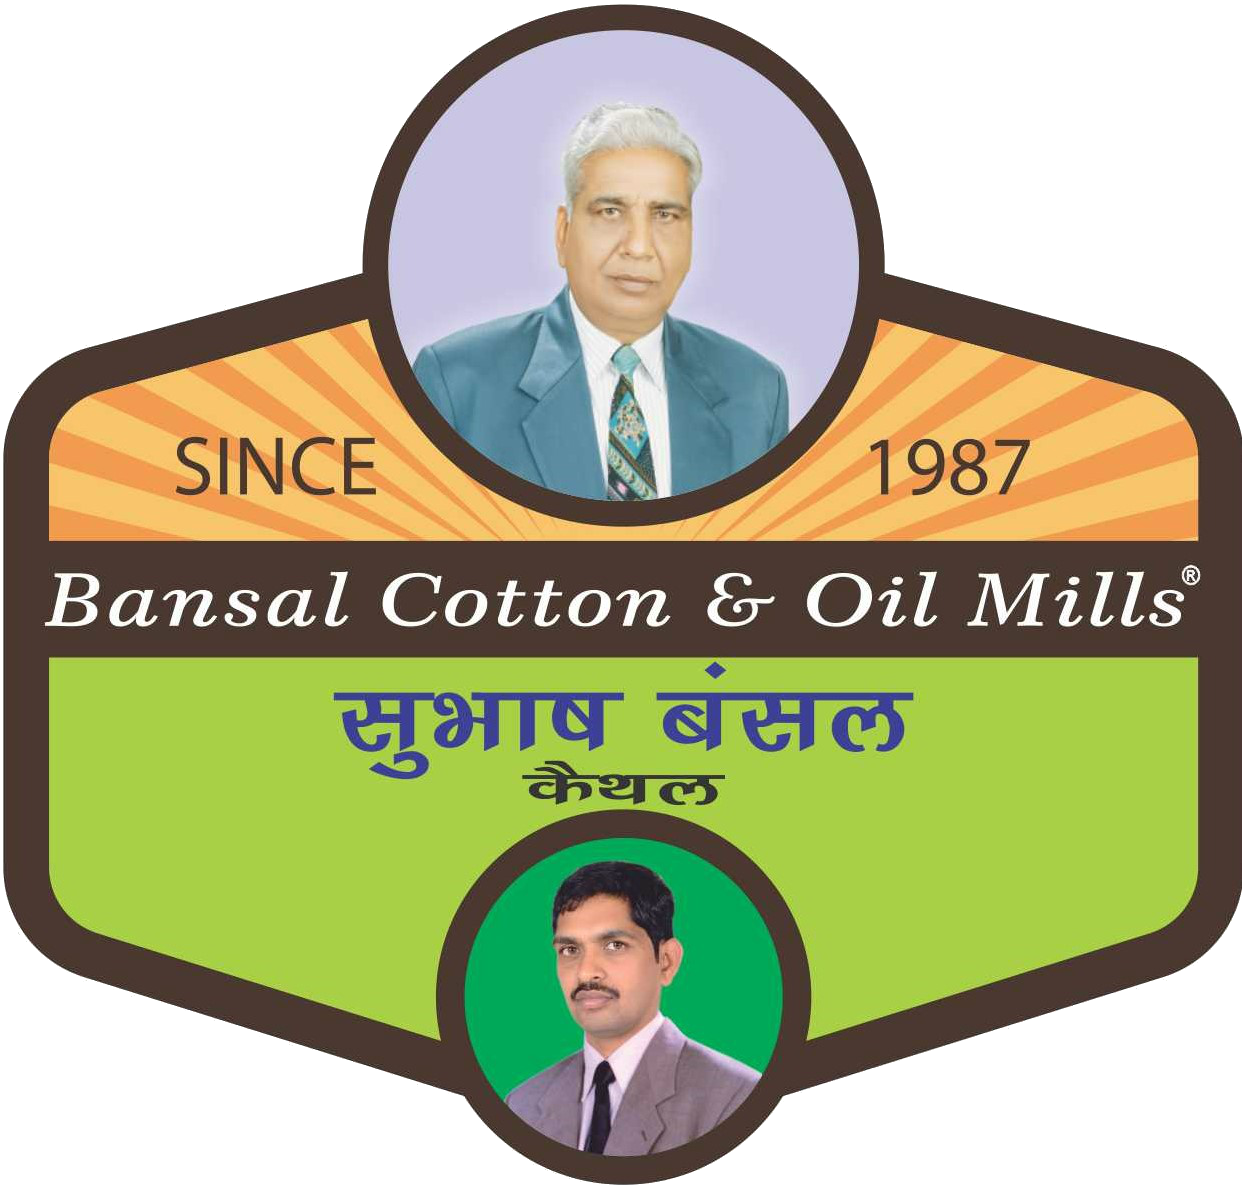 Bansal Cotton & Oil Mills